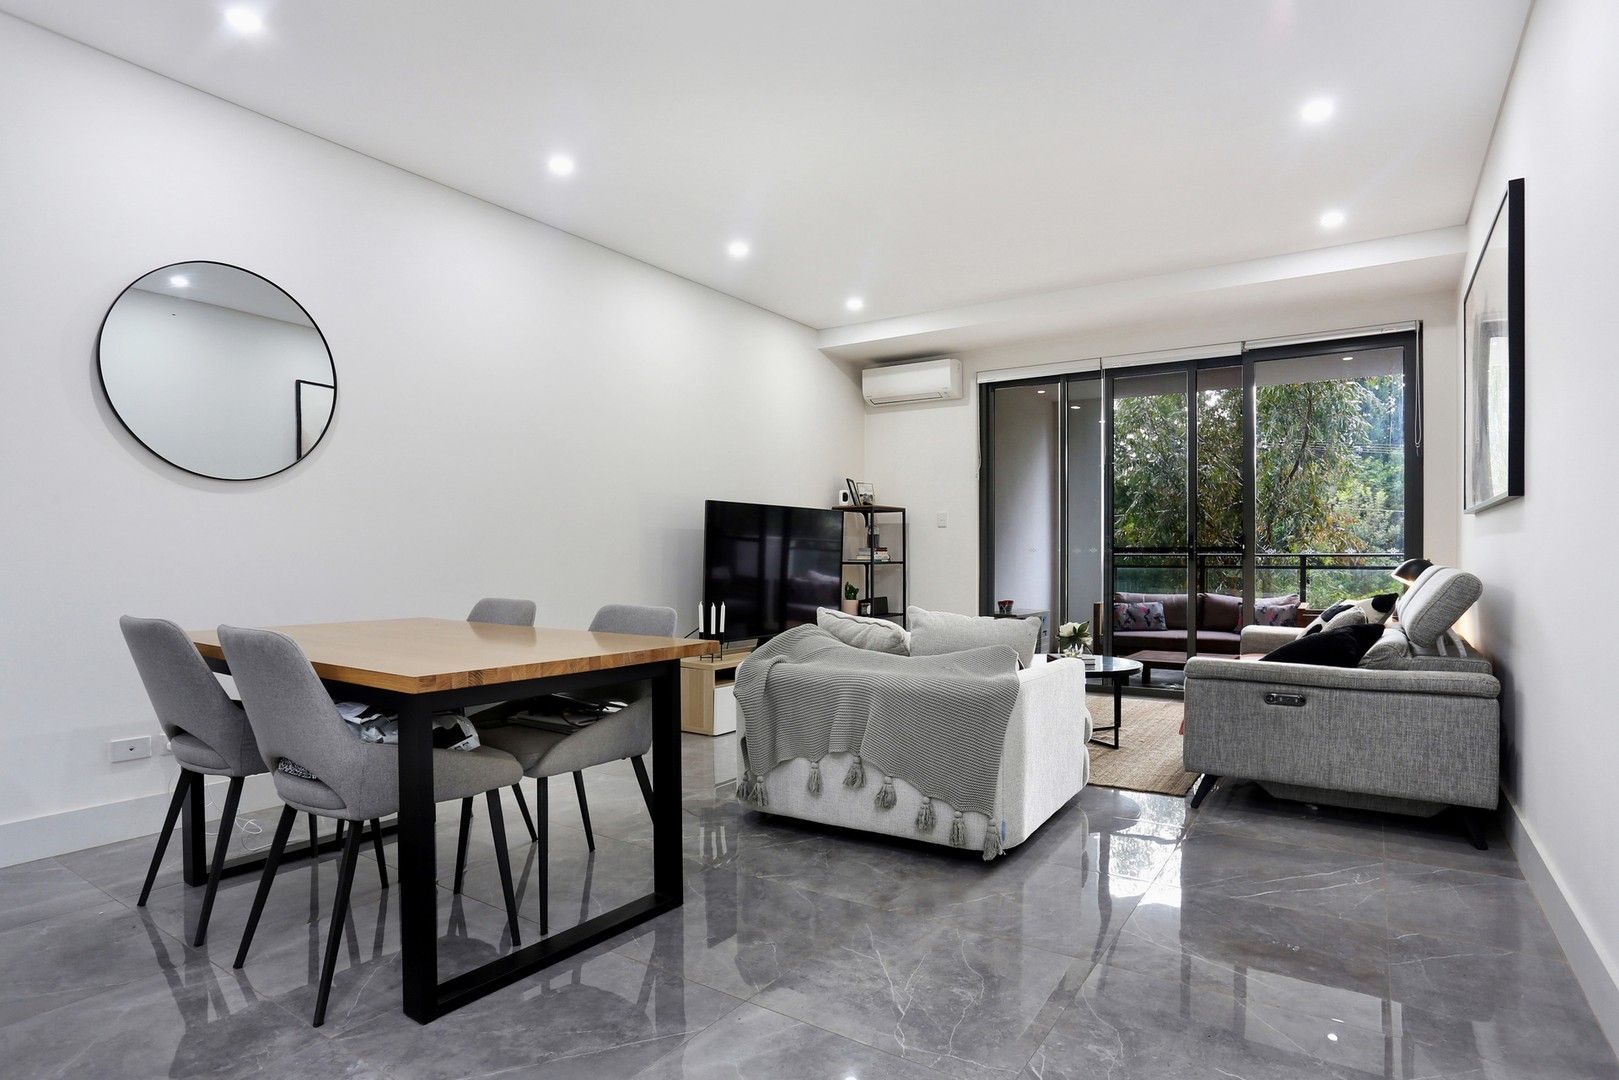 2 bedrooms Apartment / Unit / Flat in 102/22 Pinnacle Street MIRANDA NSW, 2228